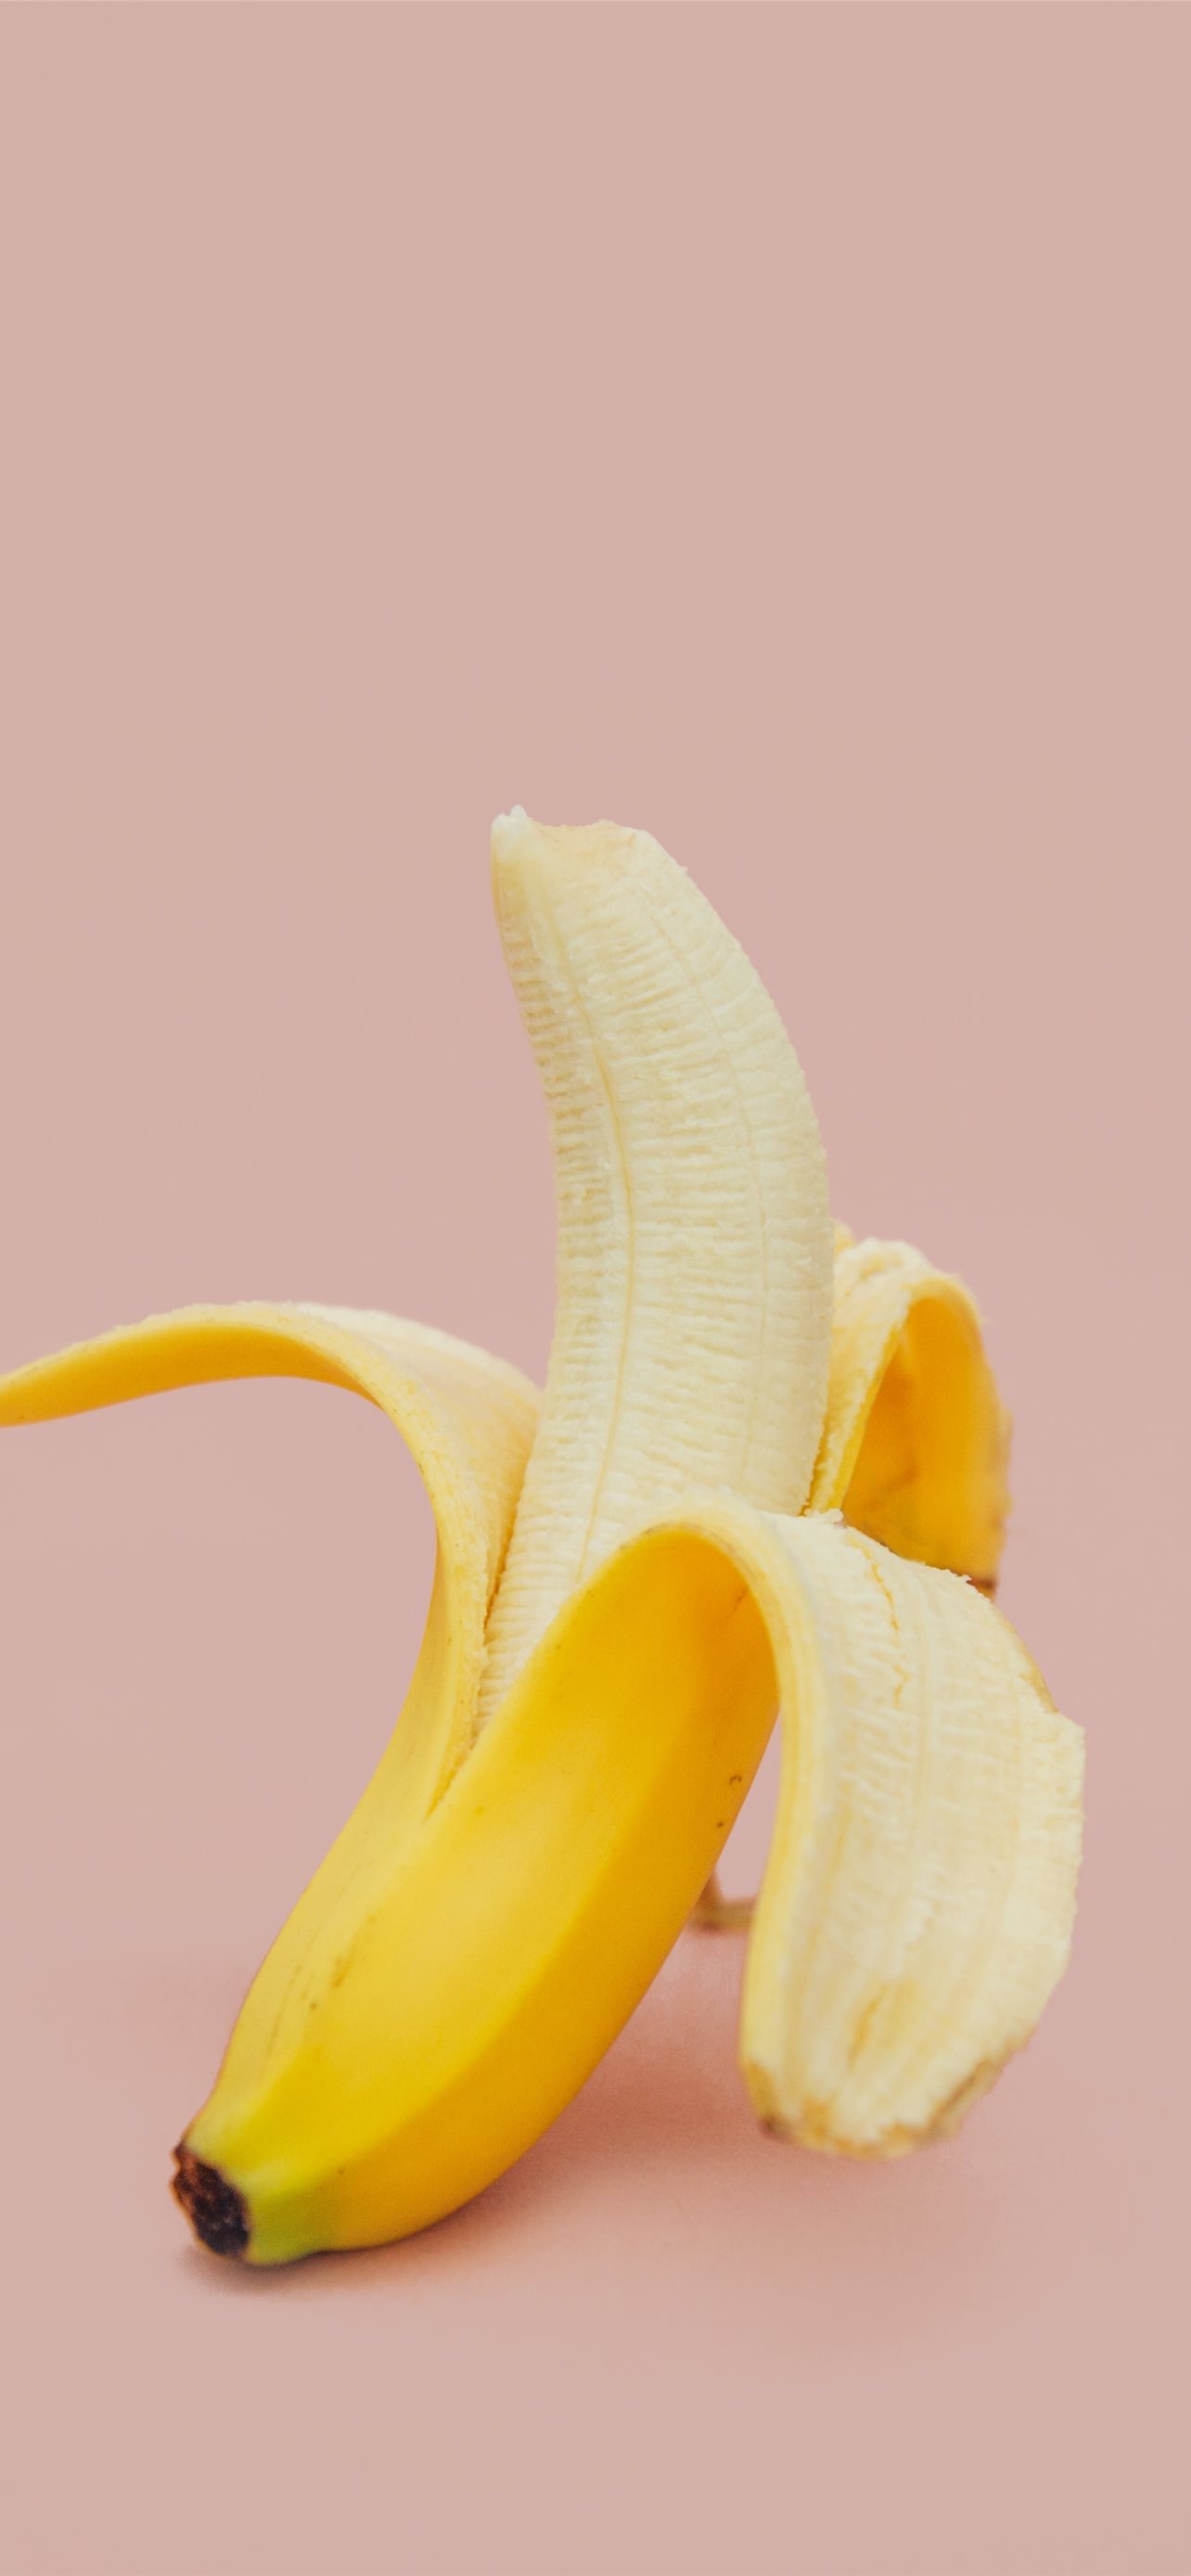 half peeled banana fruit iPhone wallpaper 